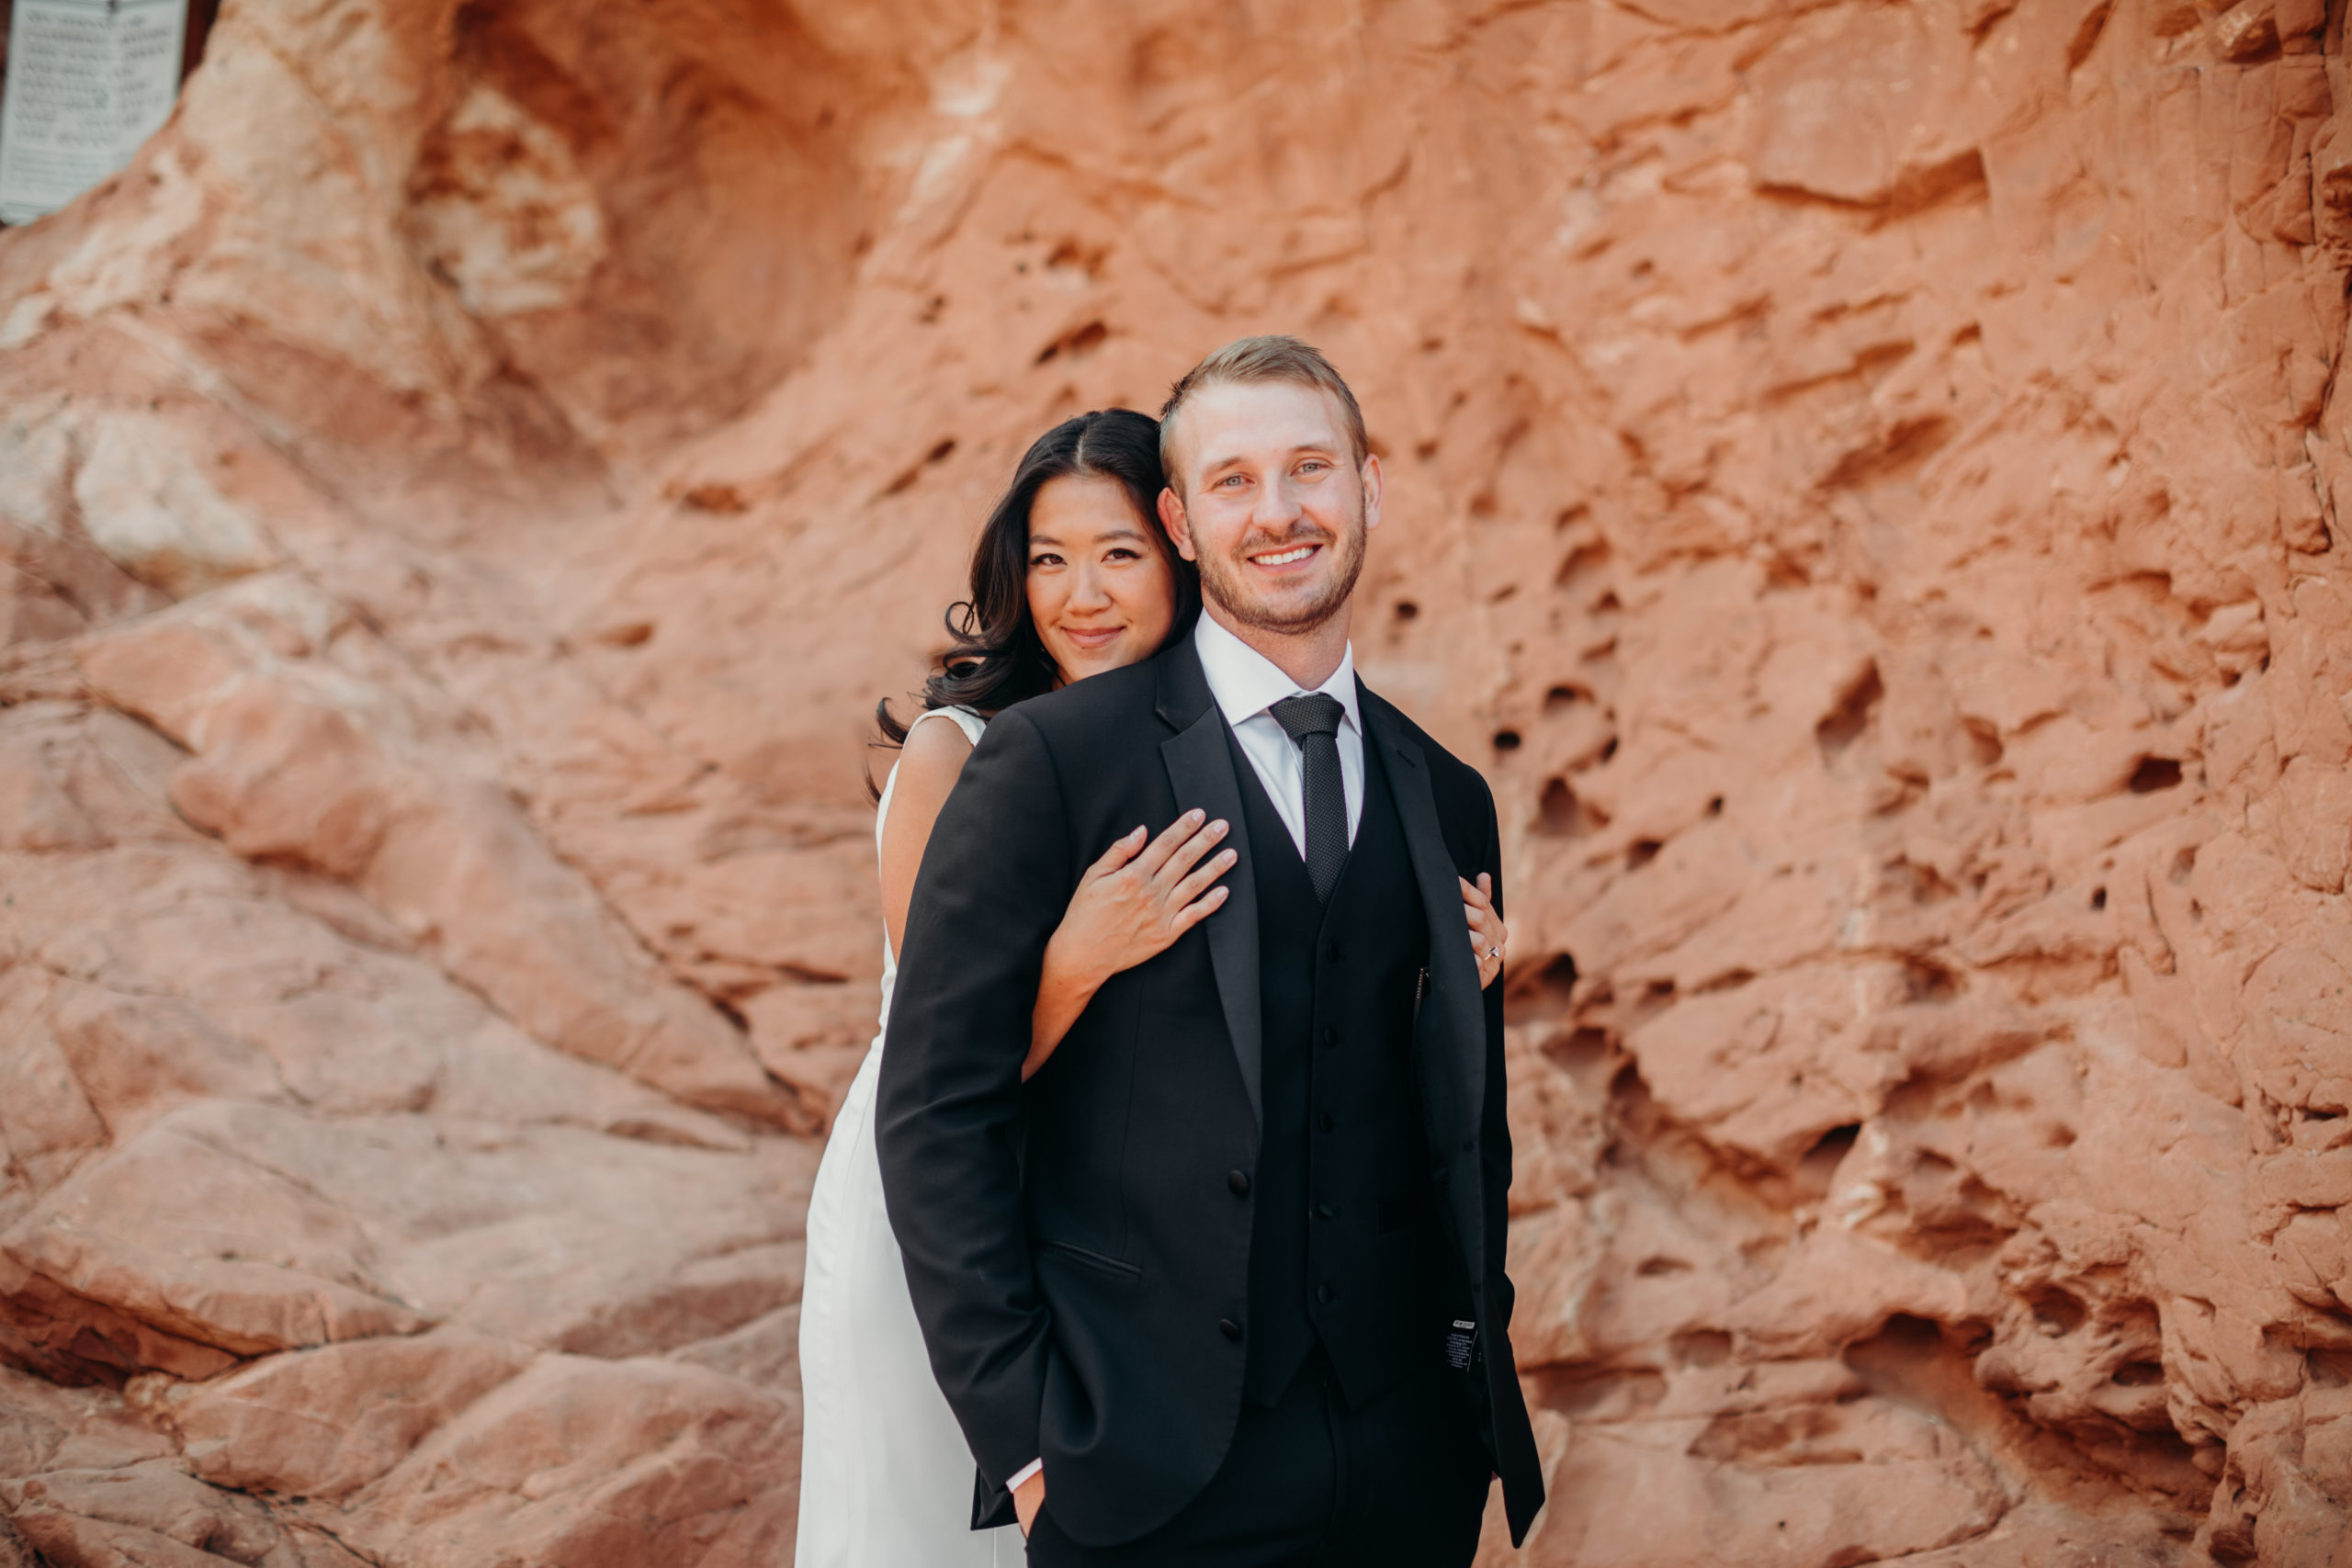 Colorado Springs wedding photographer